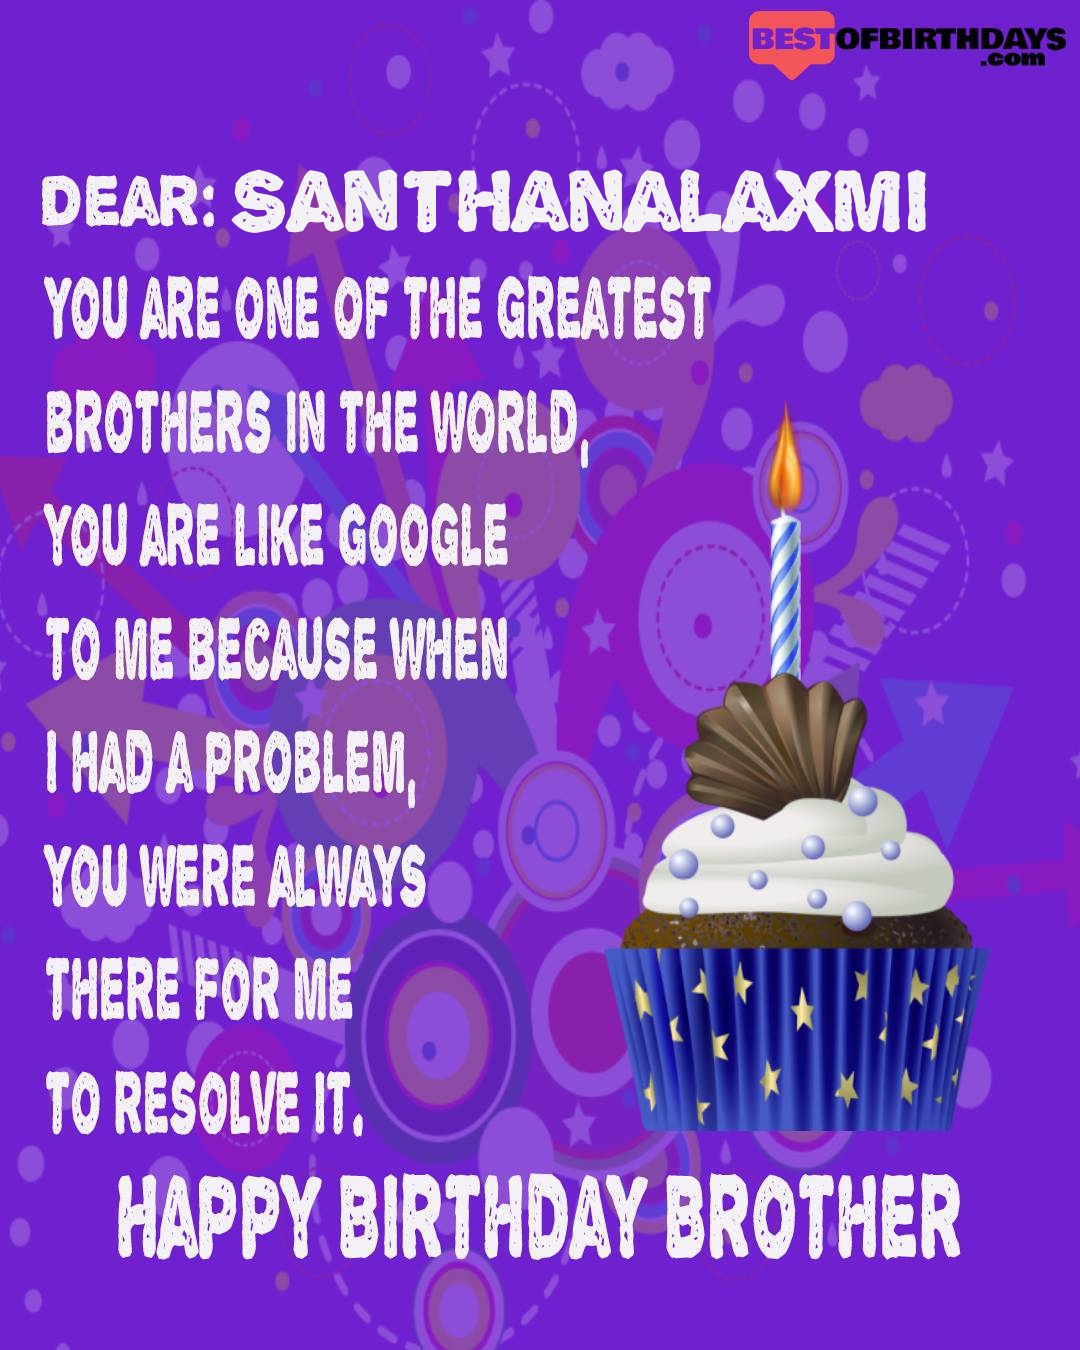 Happy birthday santhanalaxmi bhai brother bro